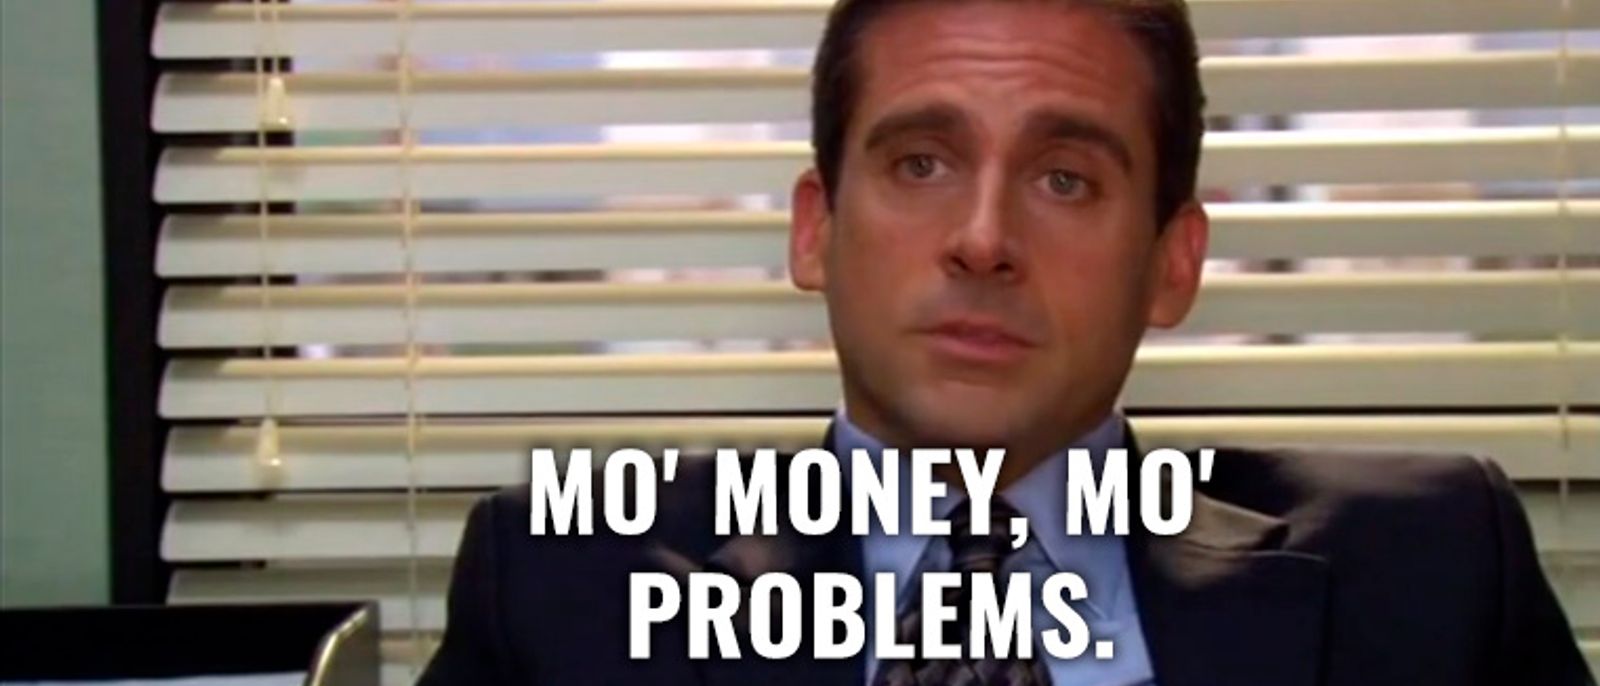 Mo' money, mo' problems.